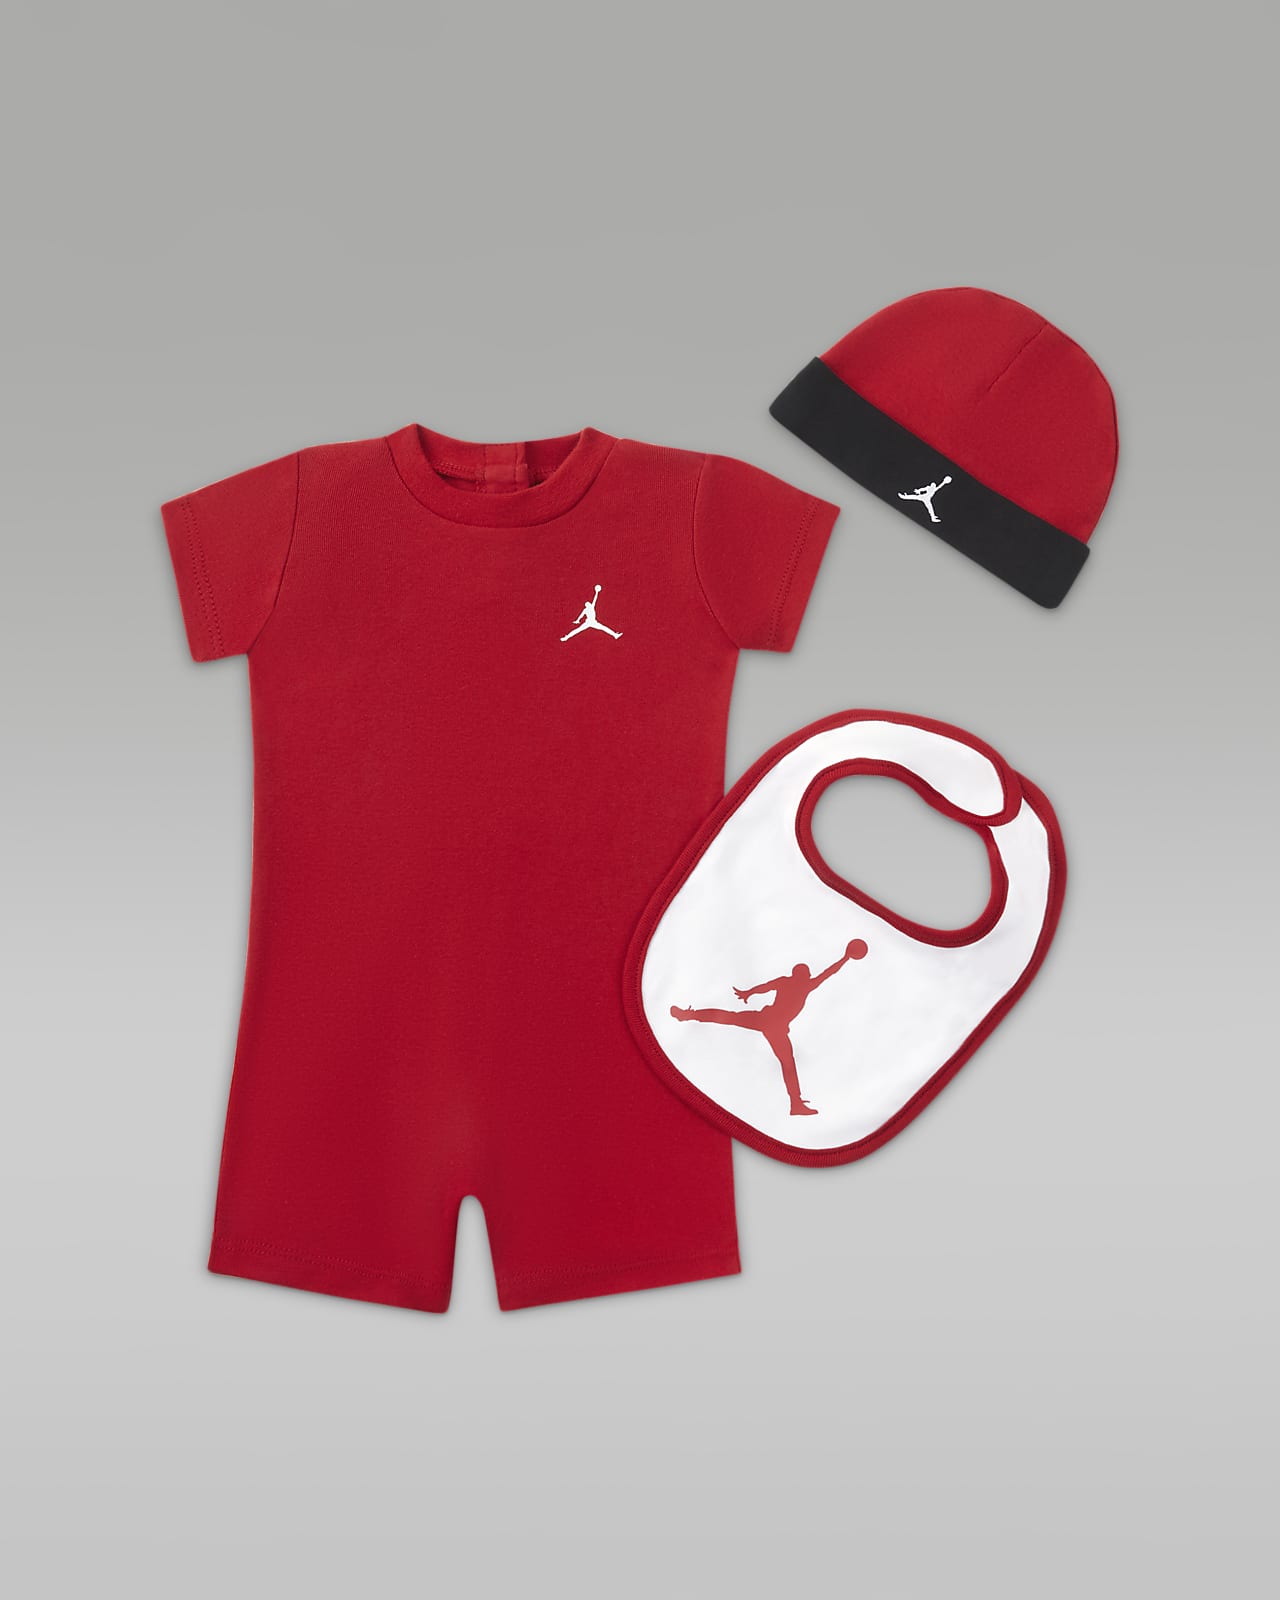 Jordan Jumpman 婴童连体衣、针织帽和围兜套装